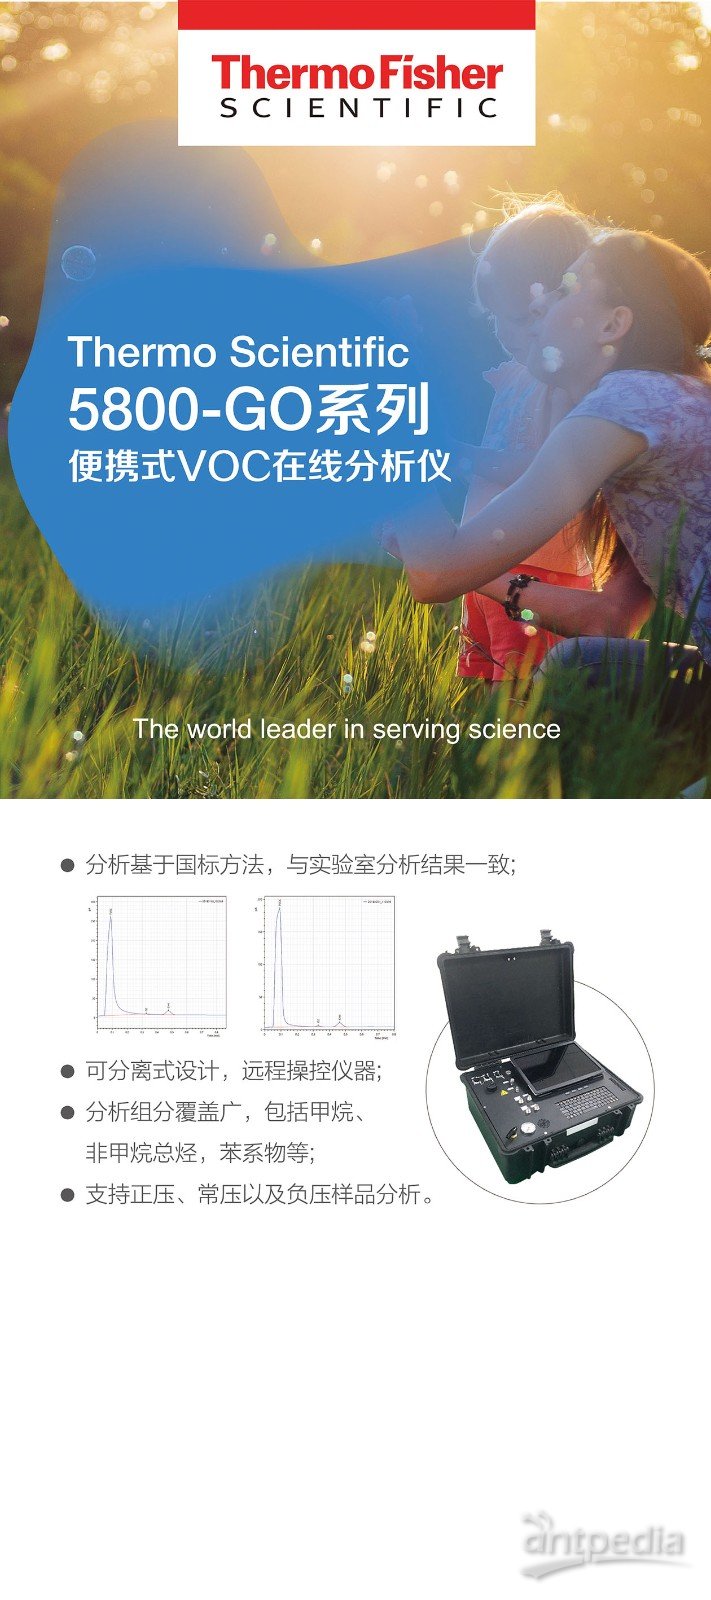 Thermo Scientific 5800-GO系列便携式VOC分析仪.jpg